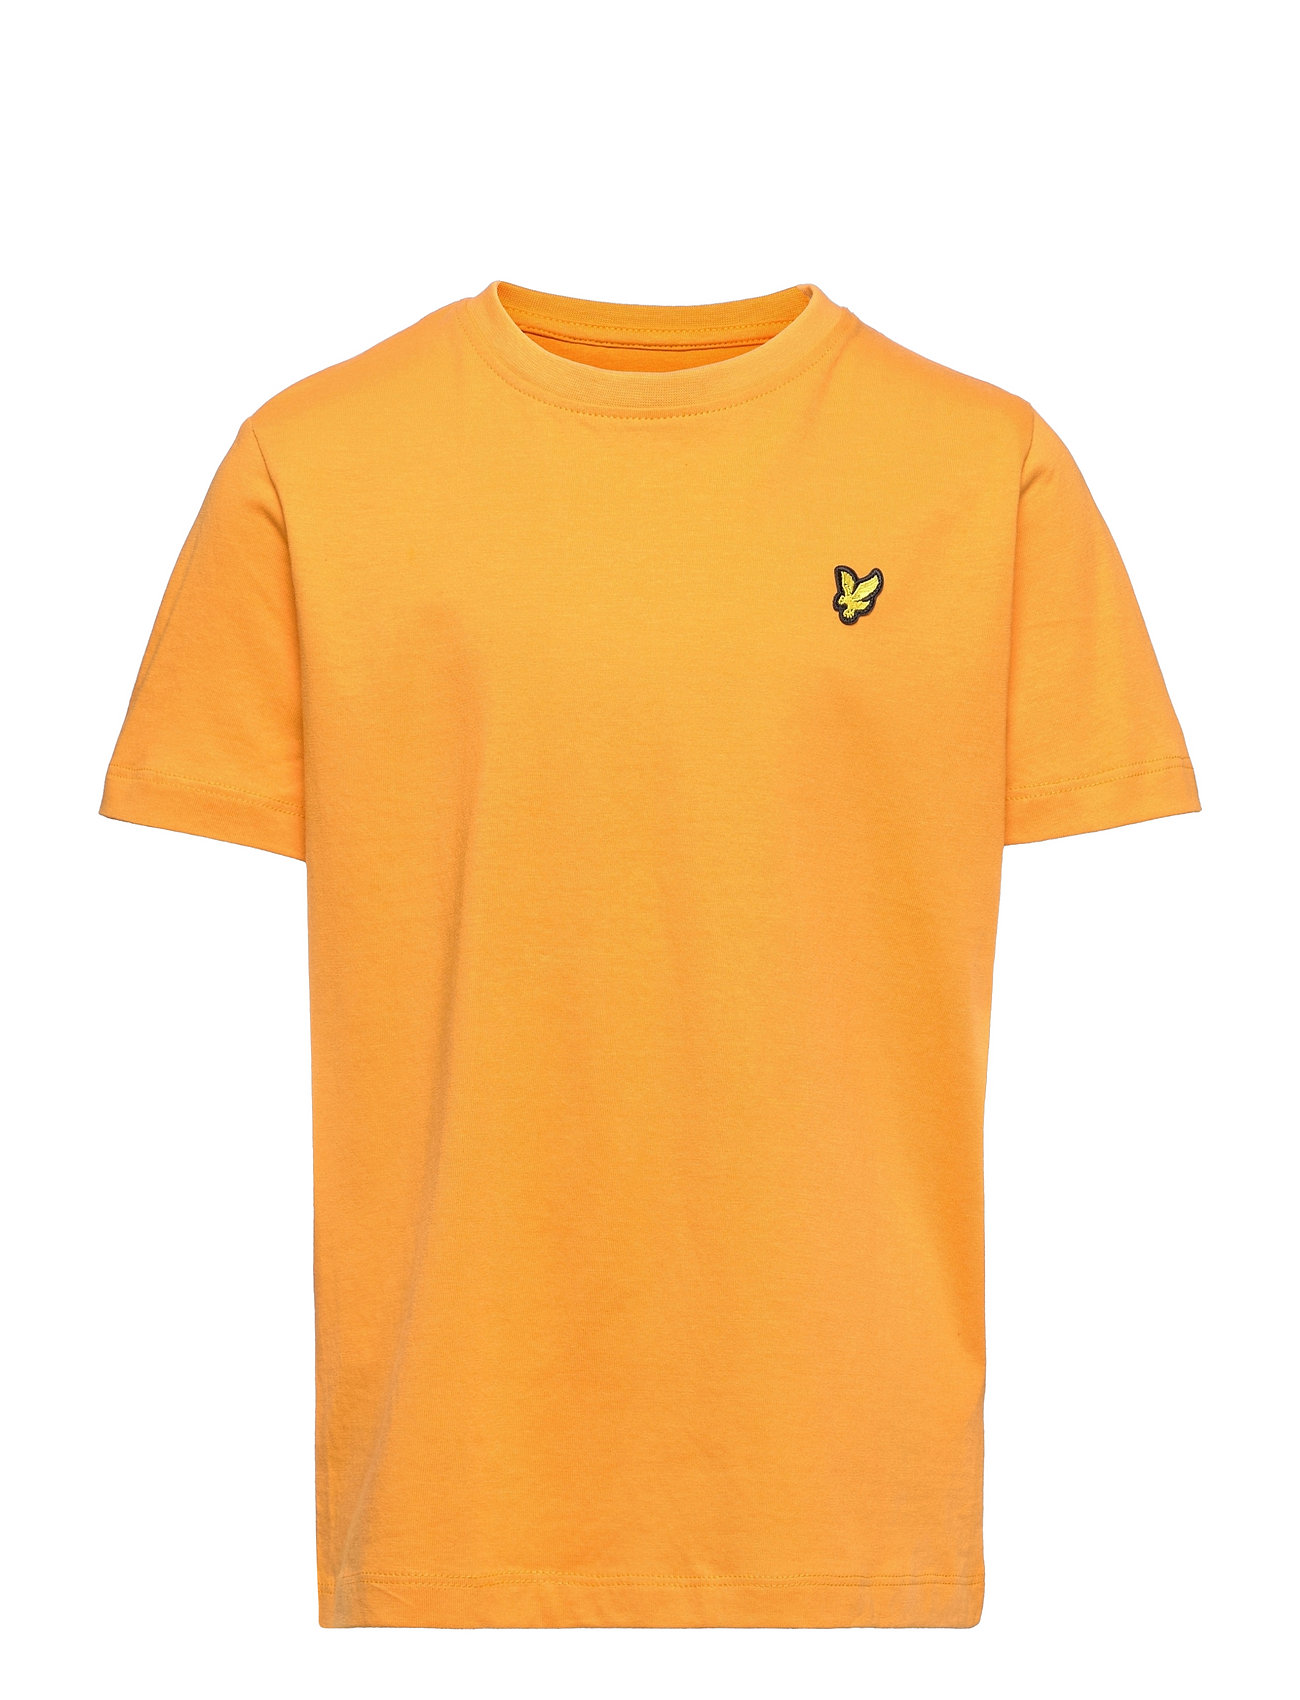 Classic T-Shirt T-shirts Short-sleeved Orange Lyle & Scott Junior